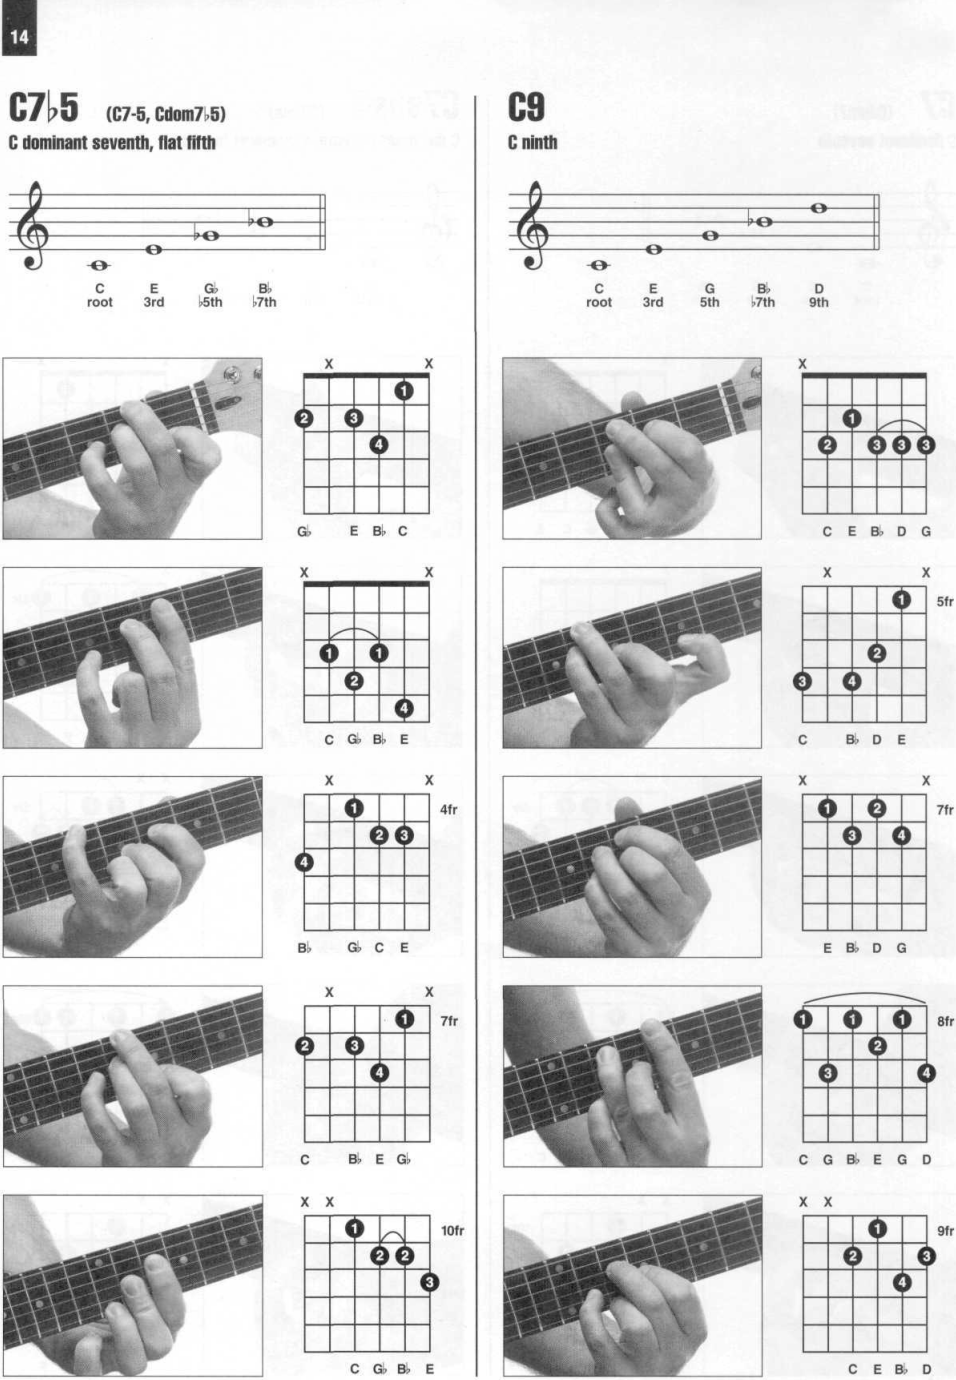 Pages from Enciclopedia visual de acordes de guitarra HAL LEONARD Page 014.png